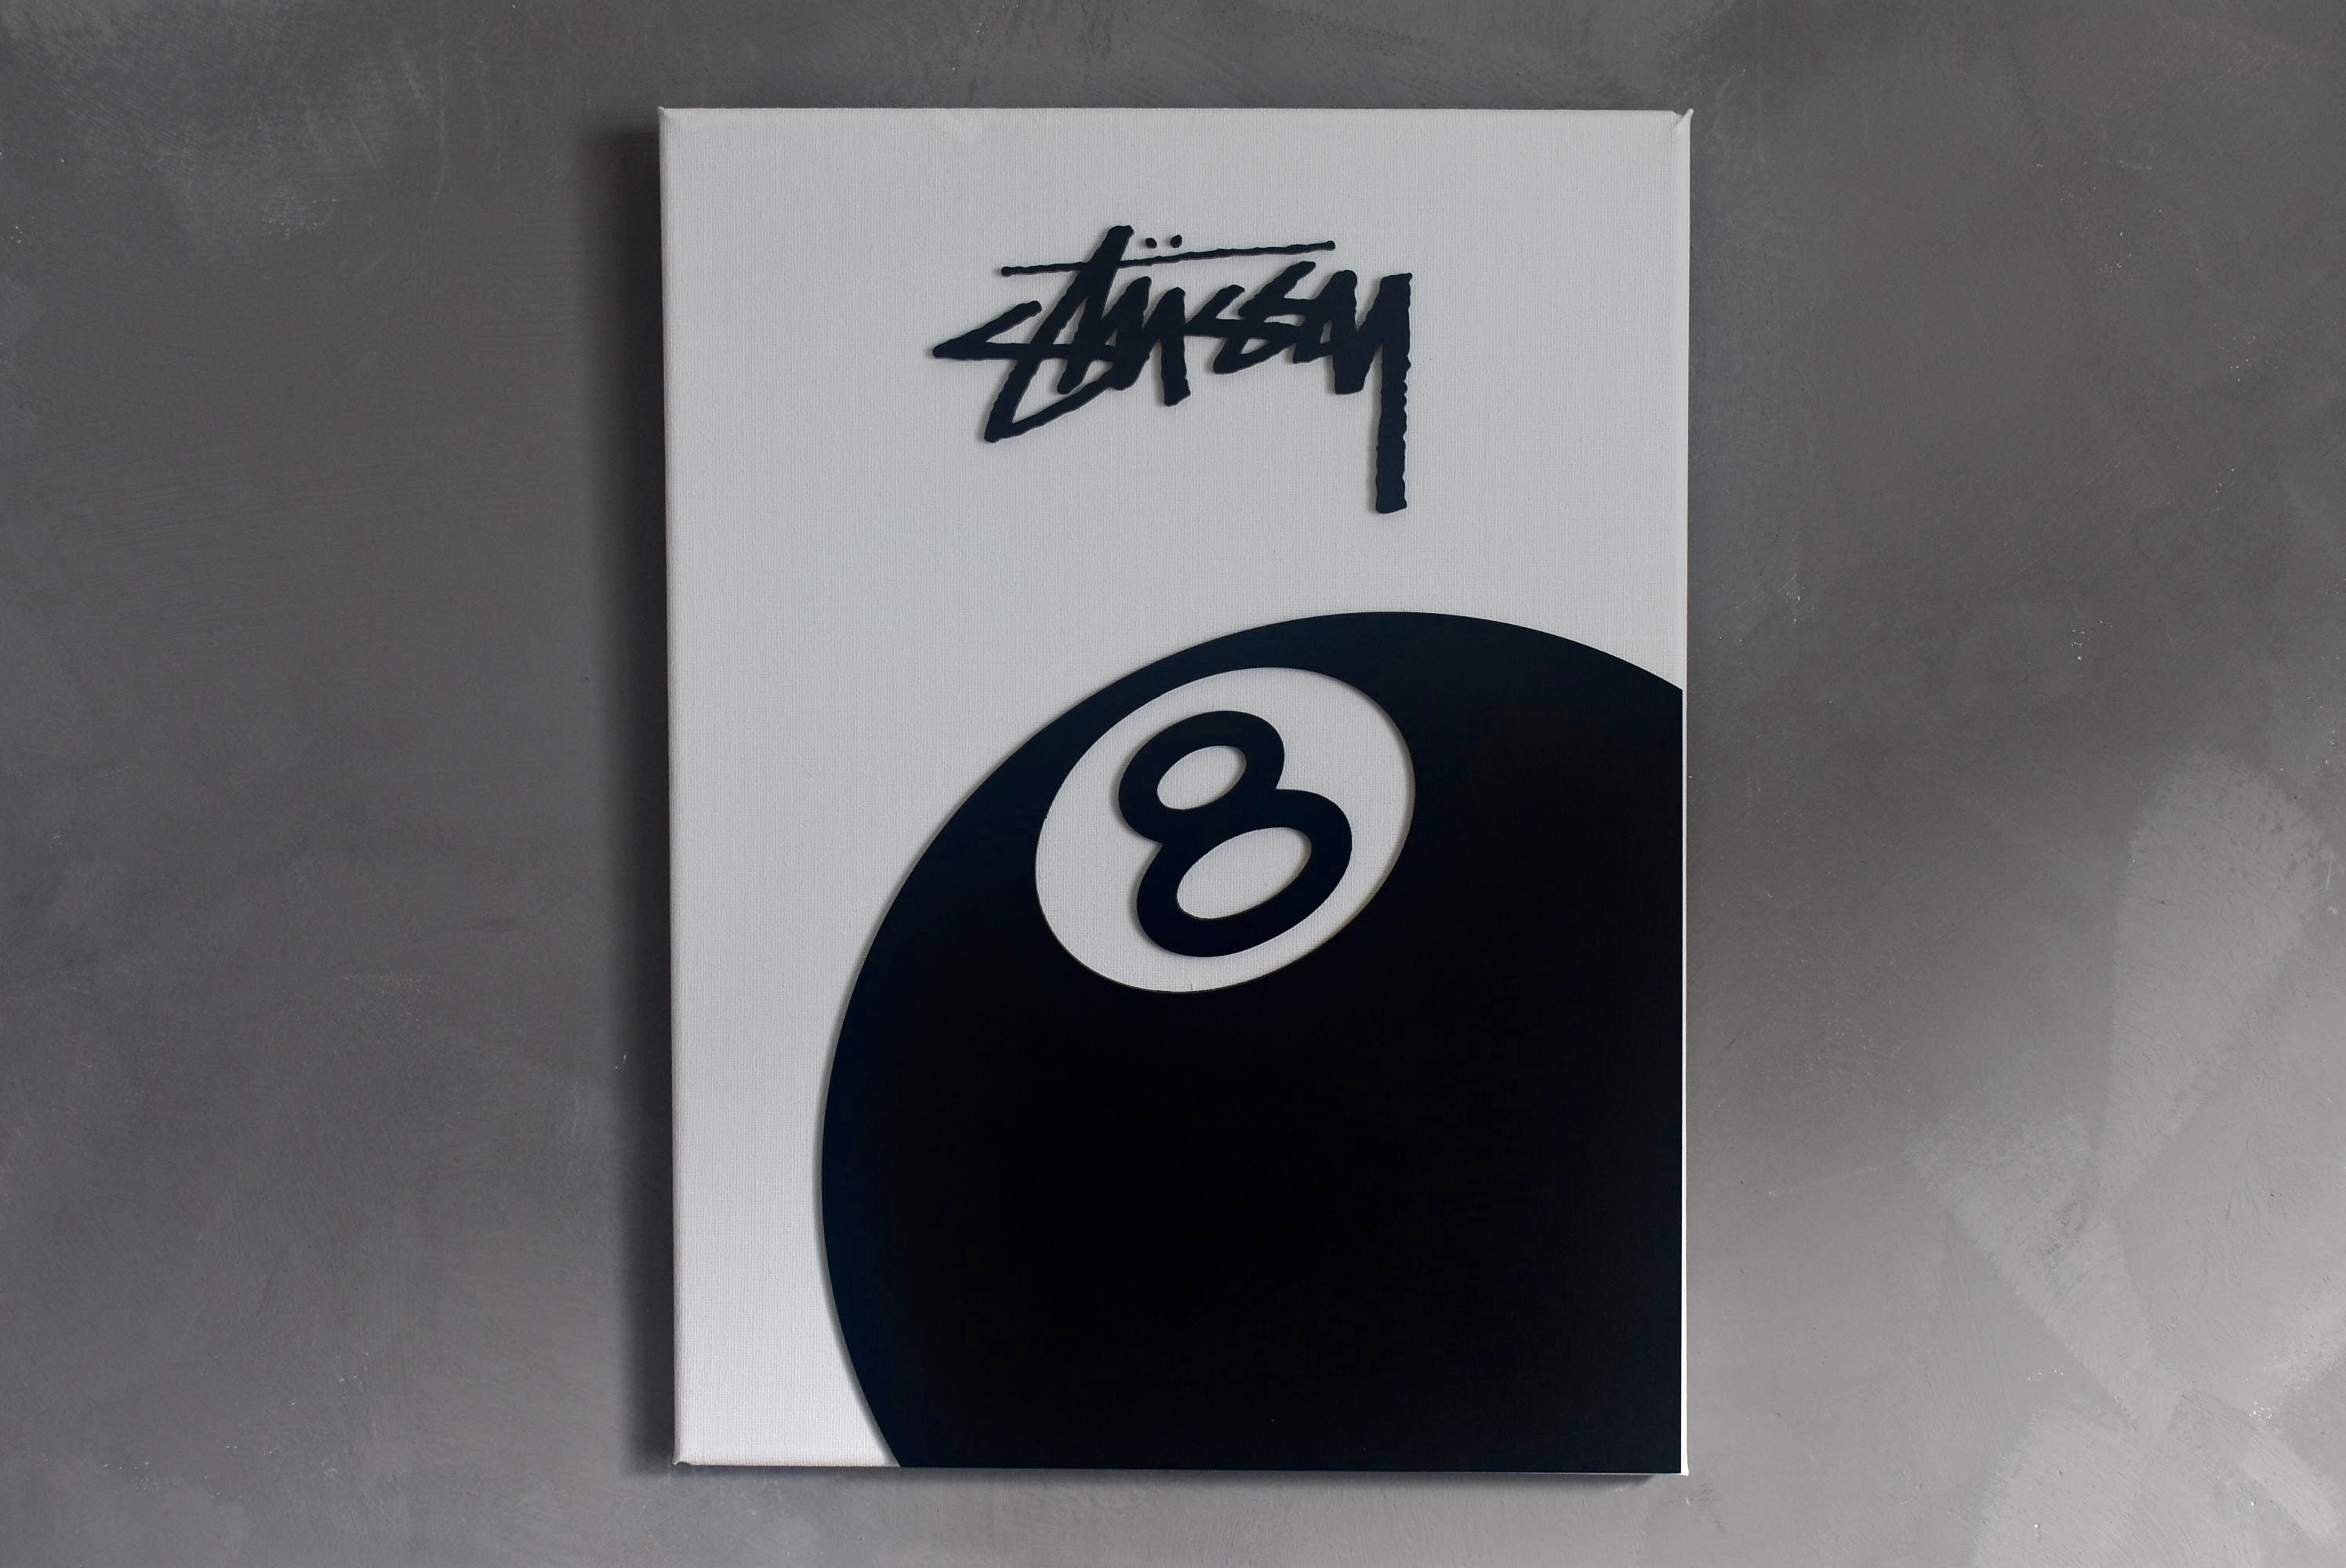 Stussy stickers - skate stickers - stussy singles/bundles